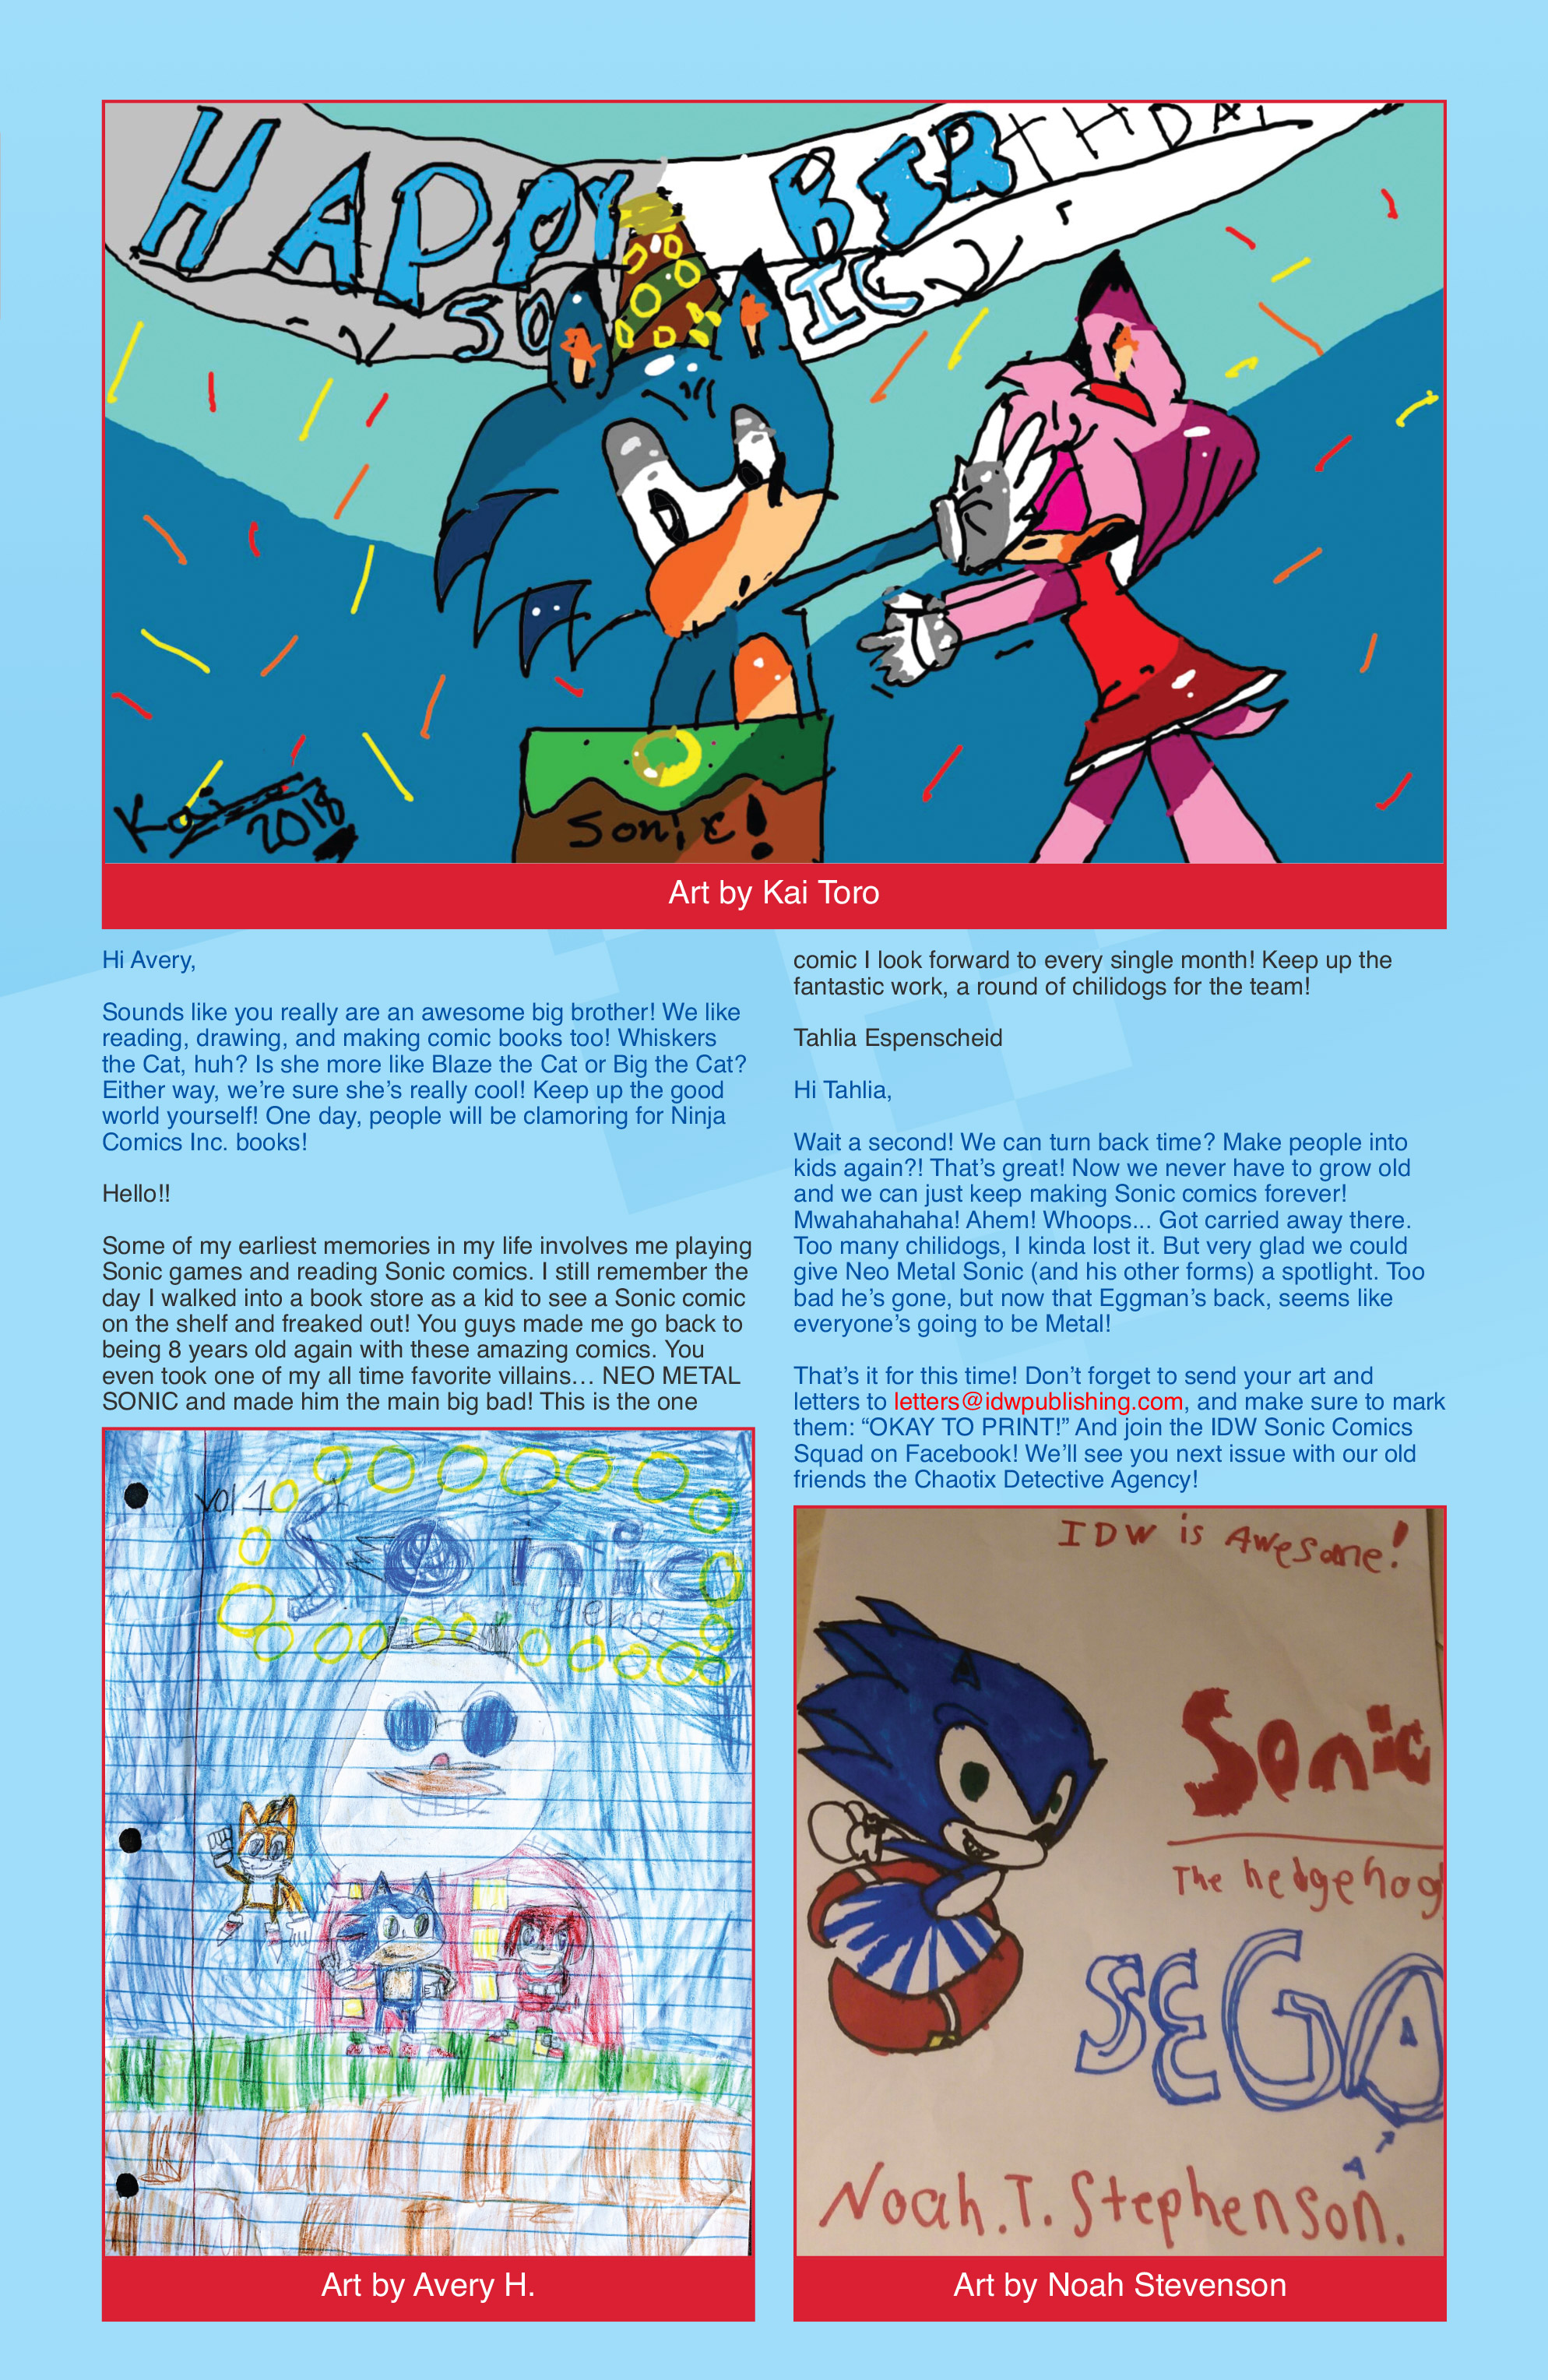 Chaotix Detective Agency Sonic the Hedgehog Art Print 